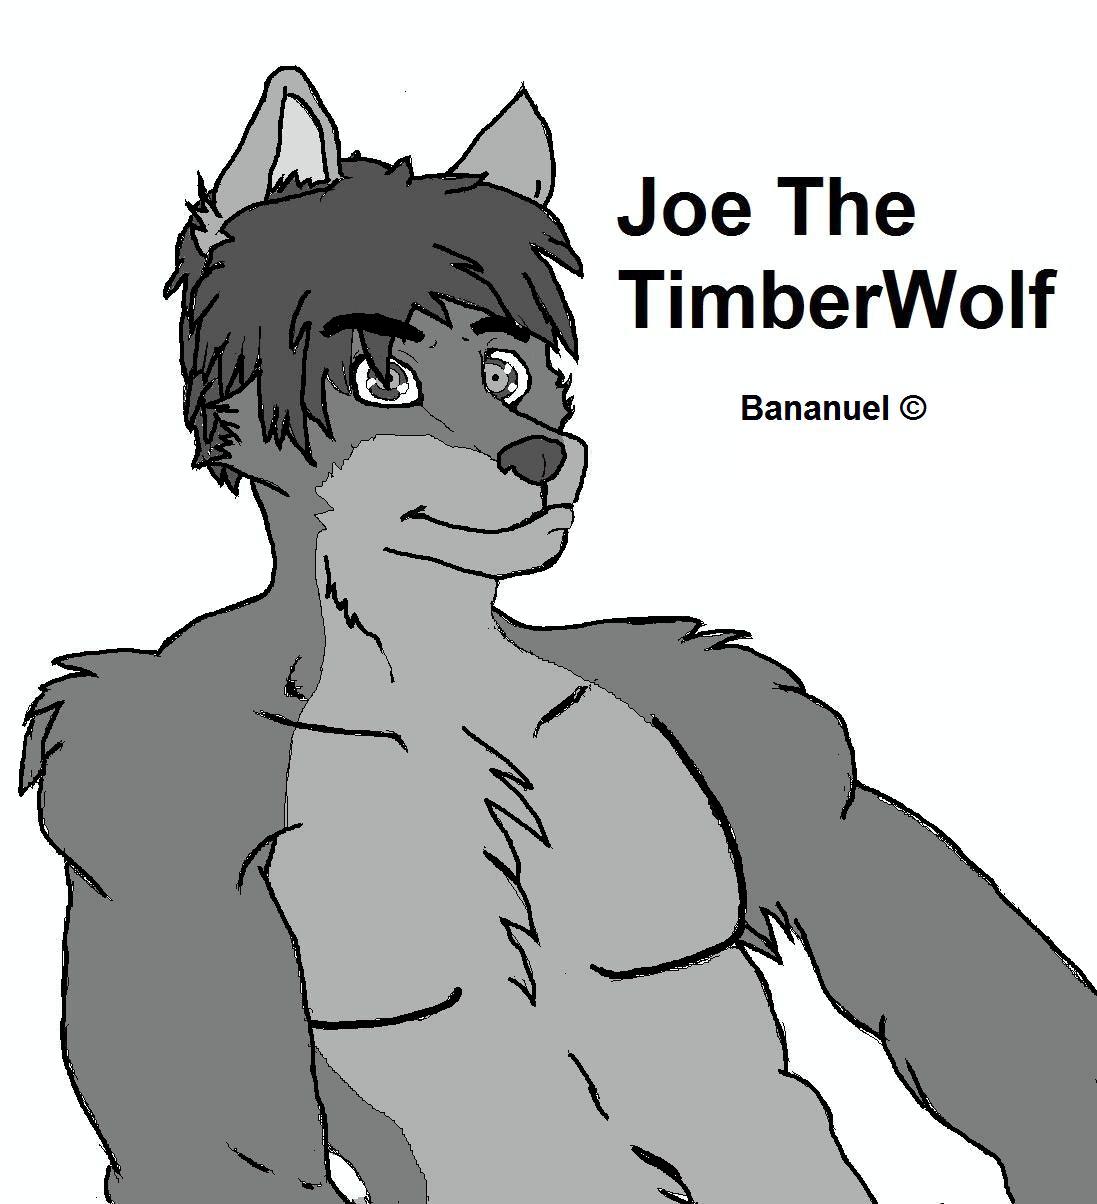 Joe The TimberWolf